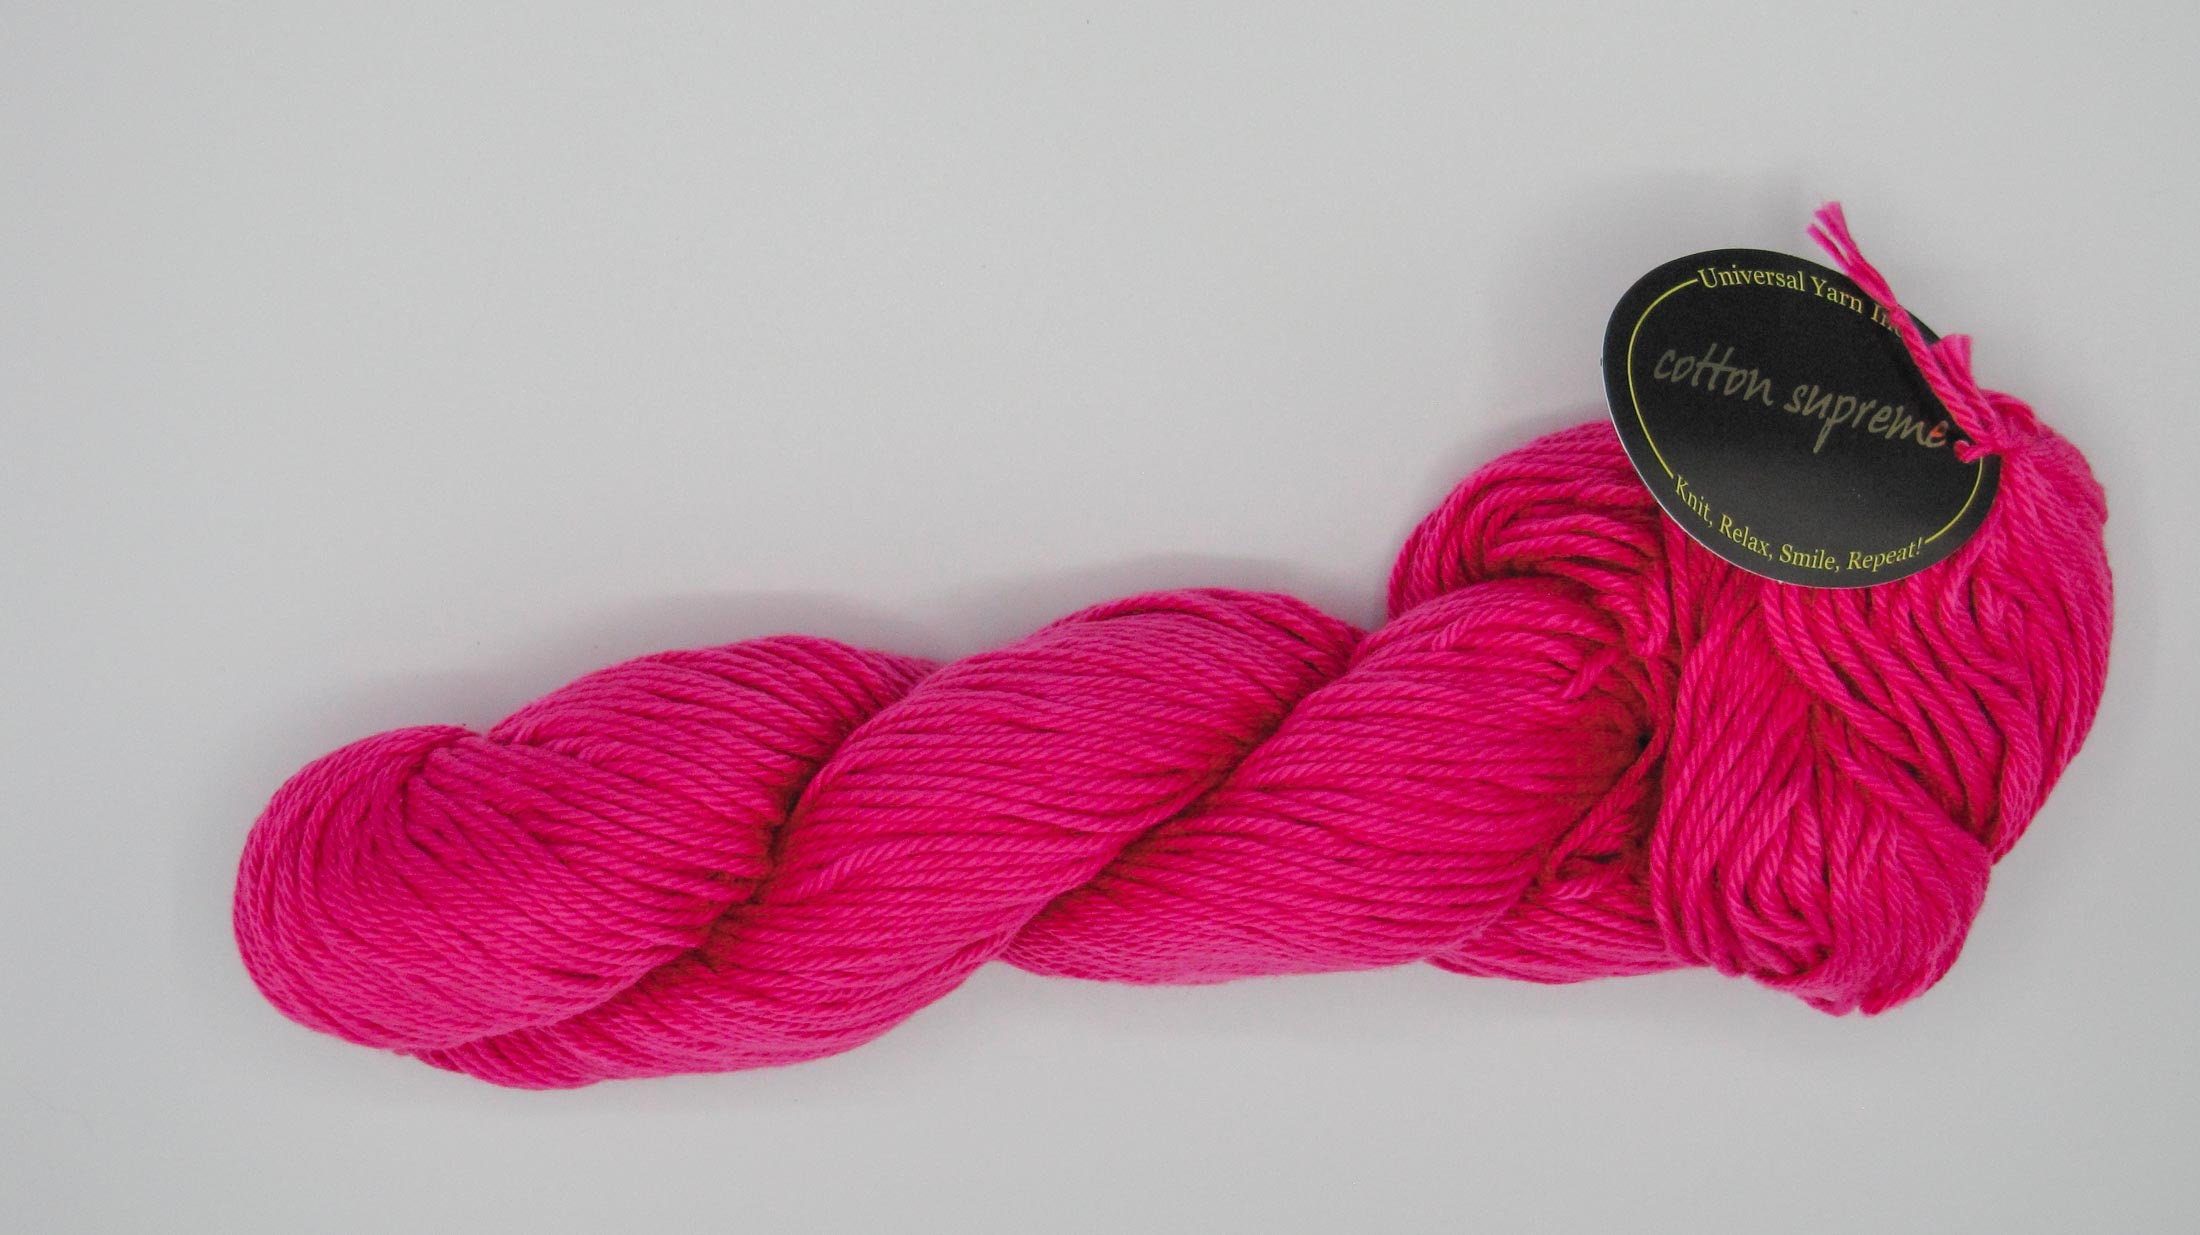 Universal Yarn Cotton Supreme - Hot Pink (512)